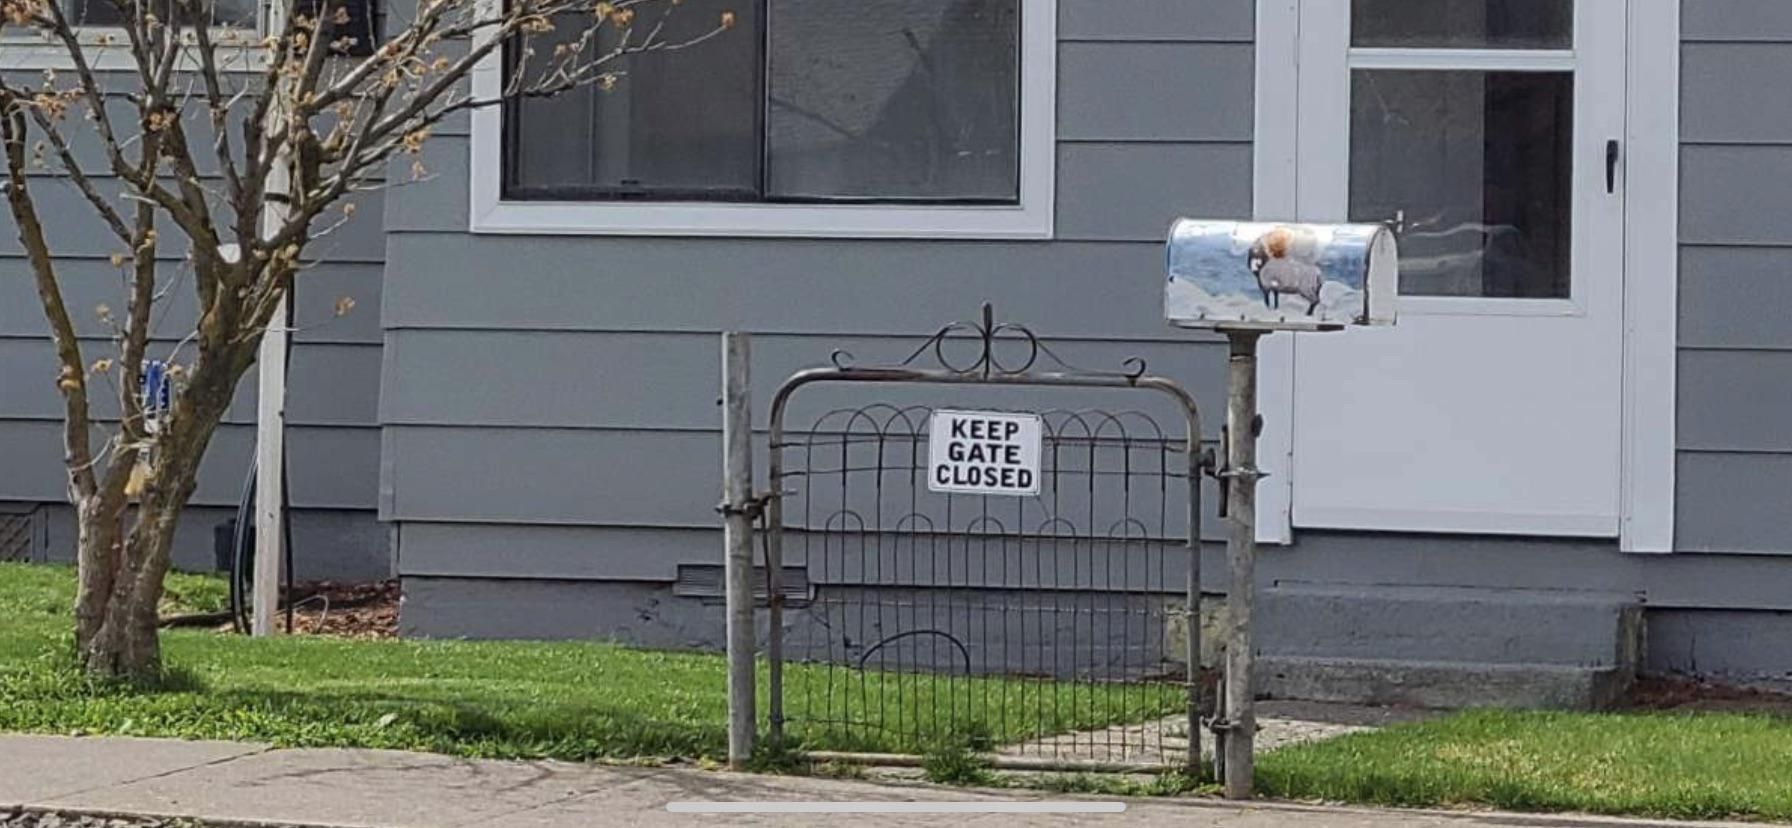 Keep gate closed